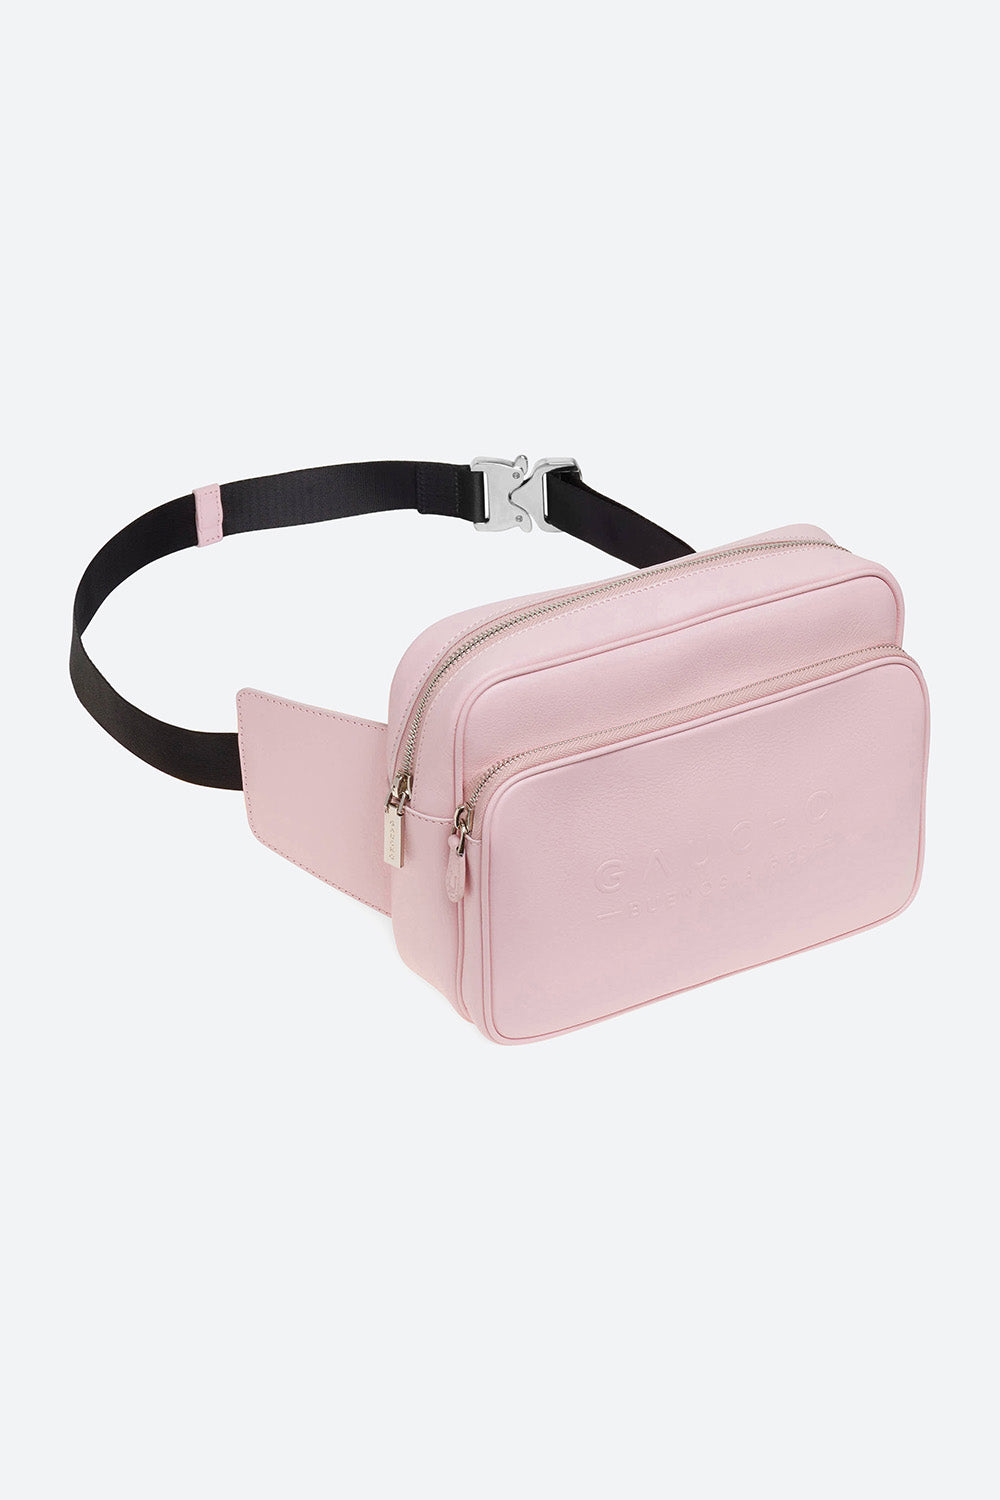 Crossbody Bag in Peony Pink